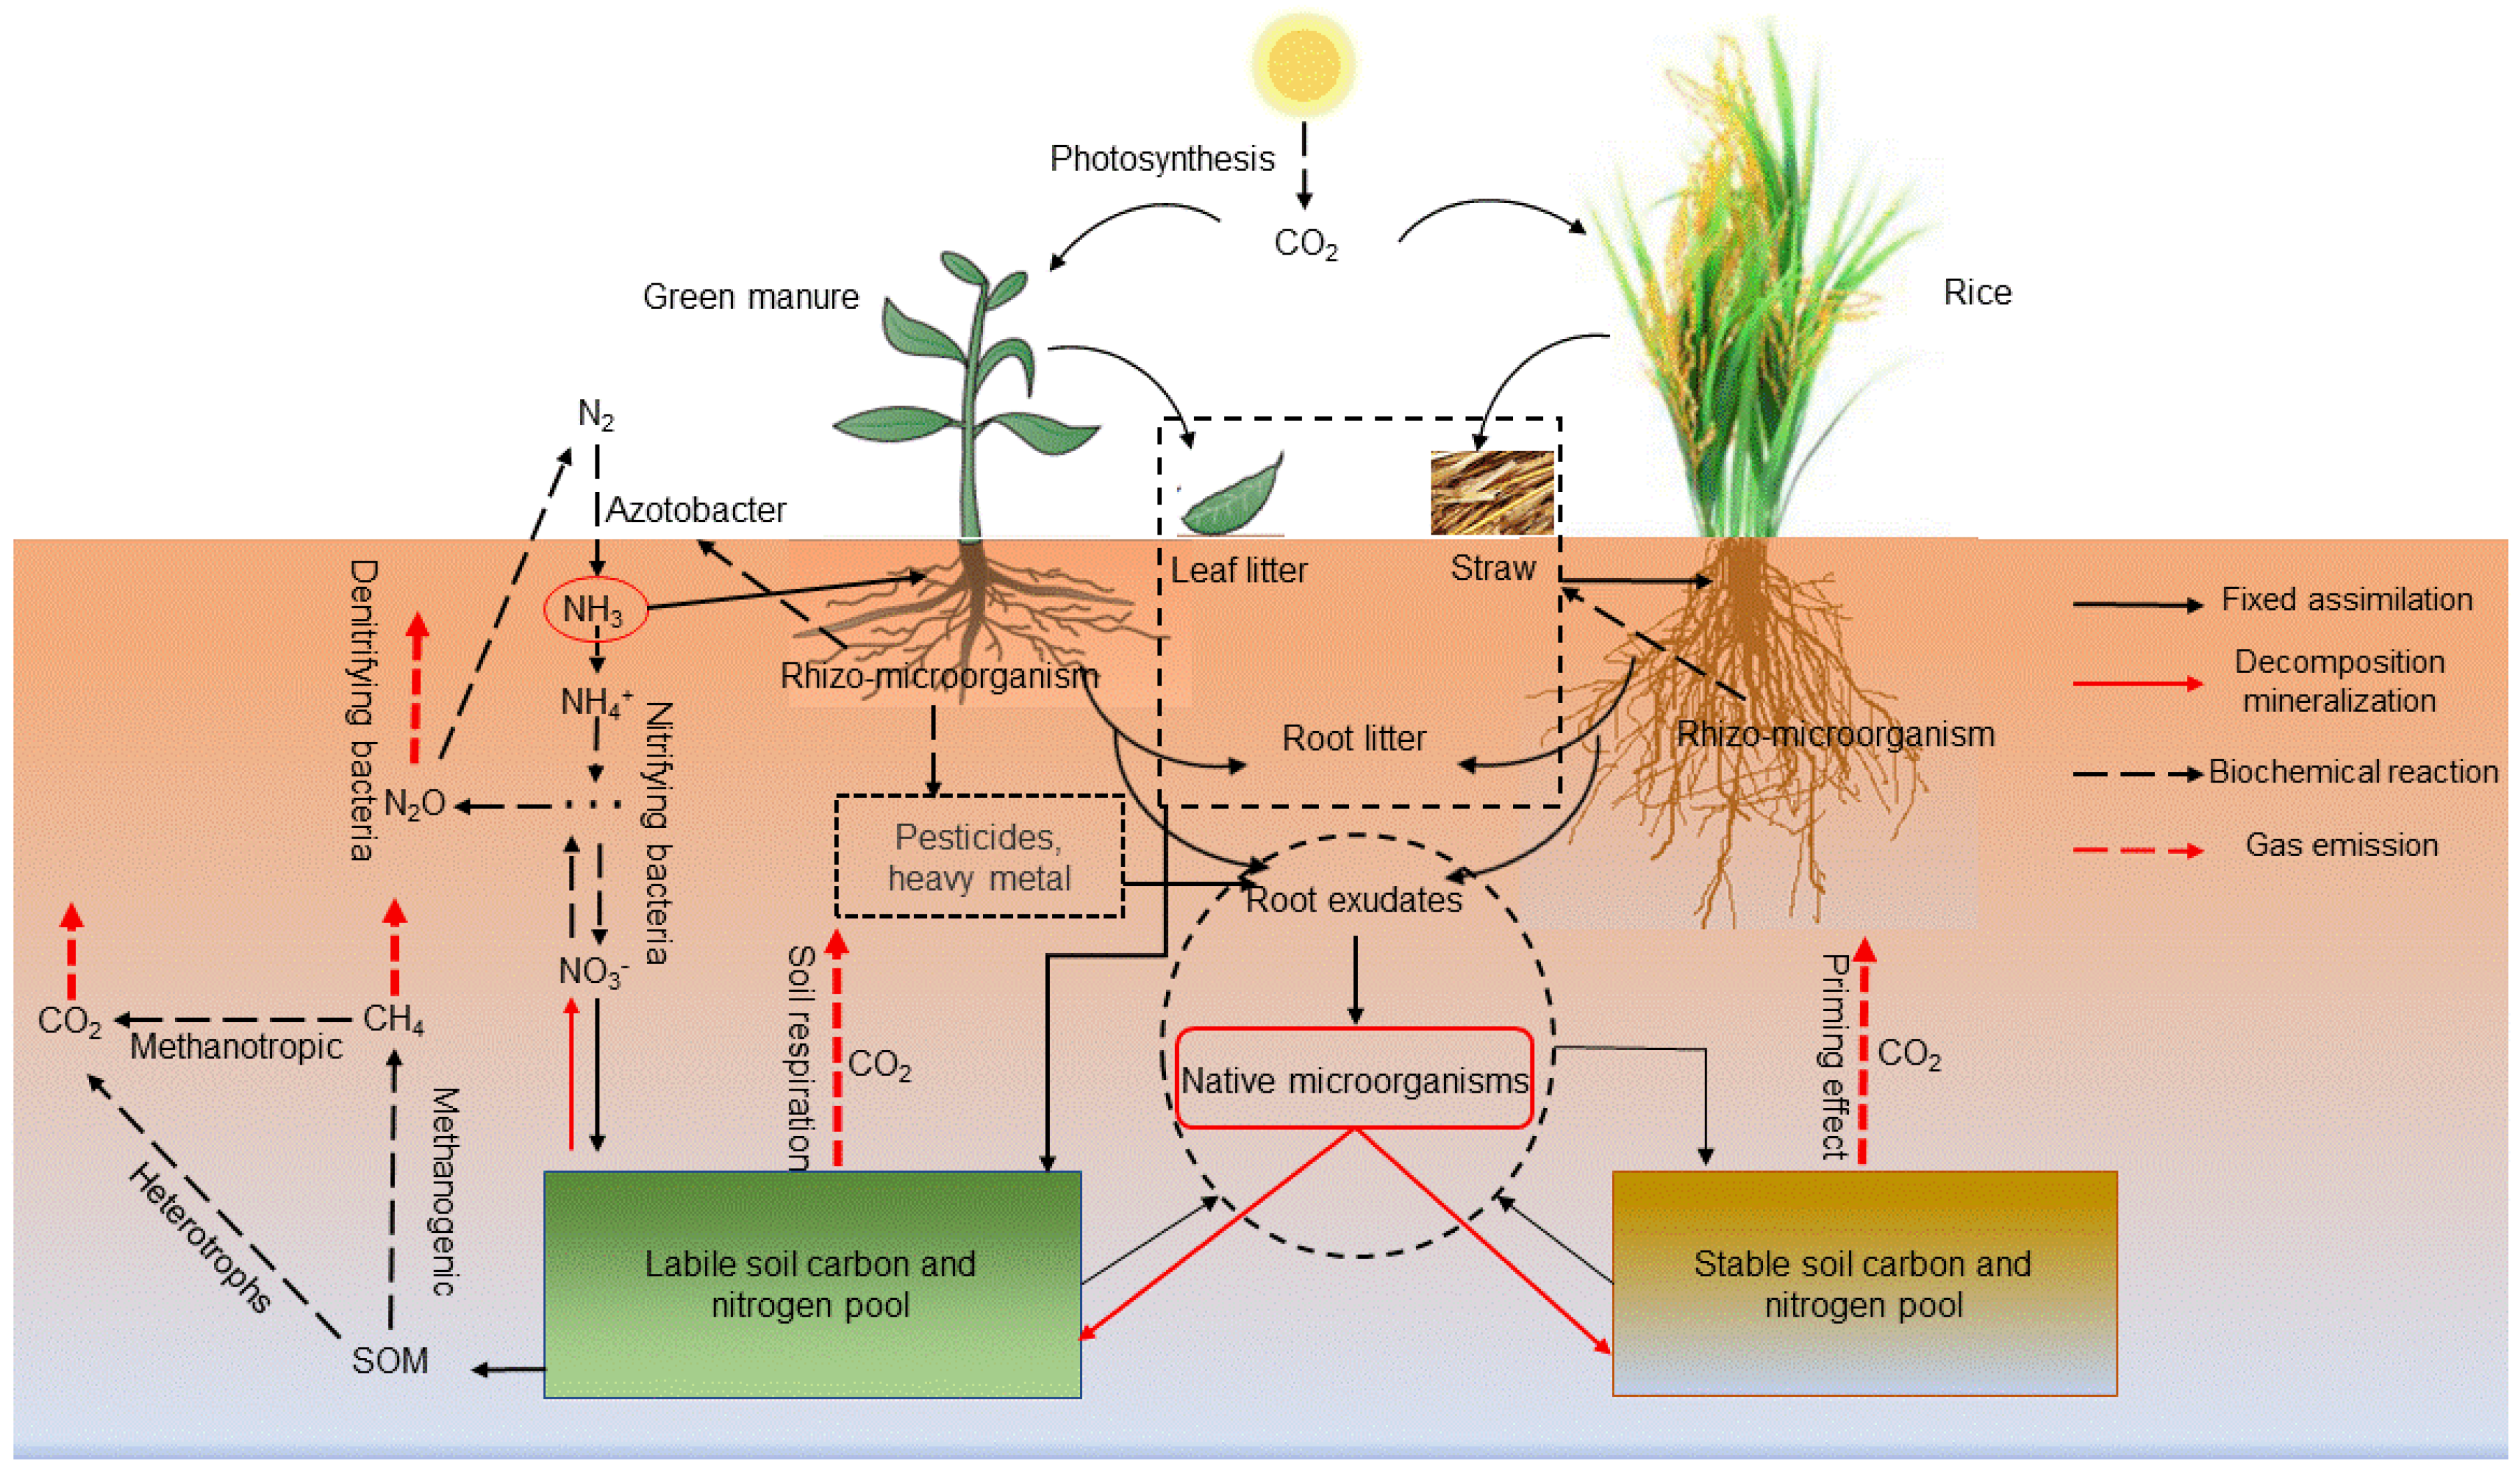 Image of Green manure organic nitrogen fertilizer